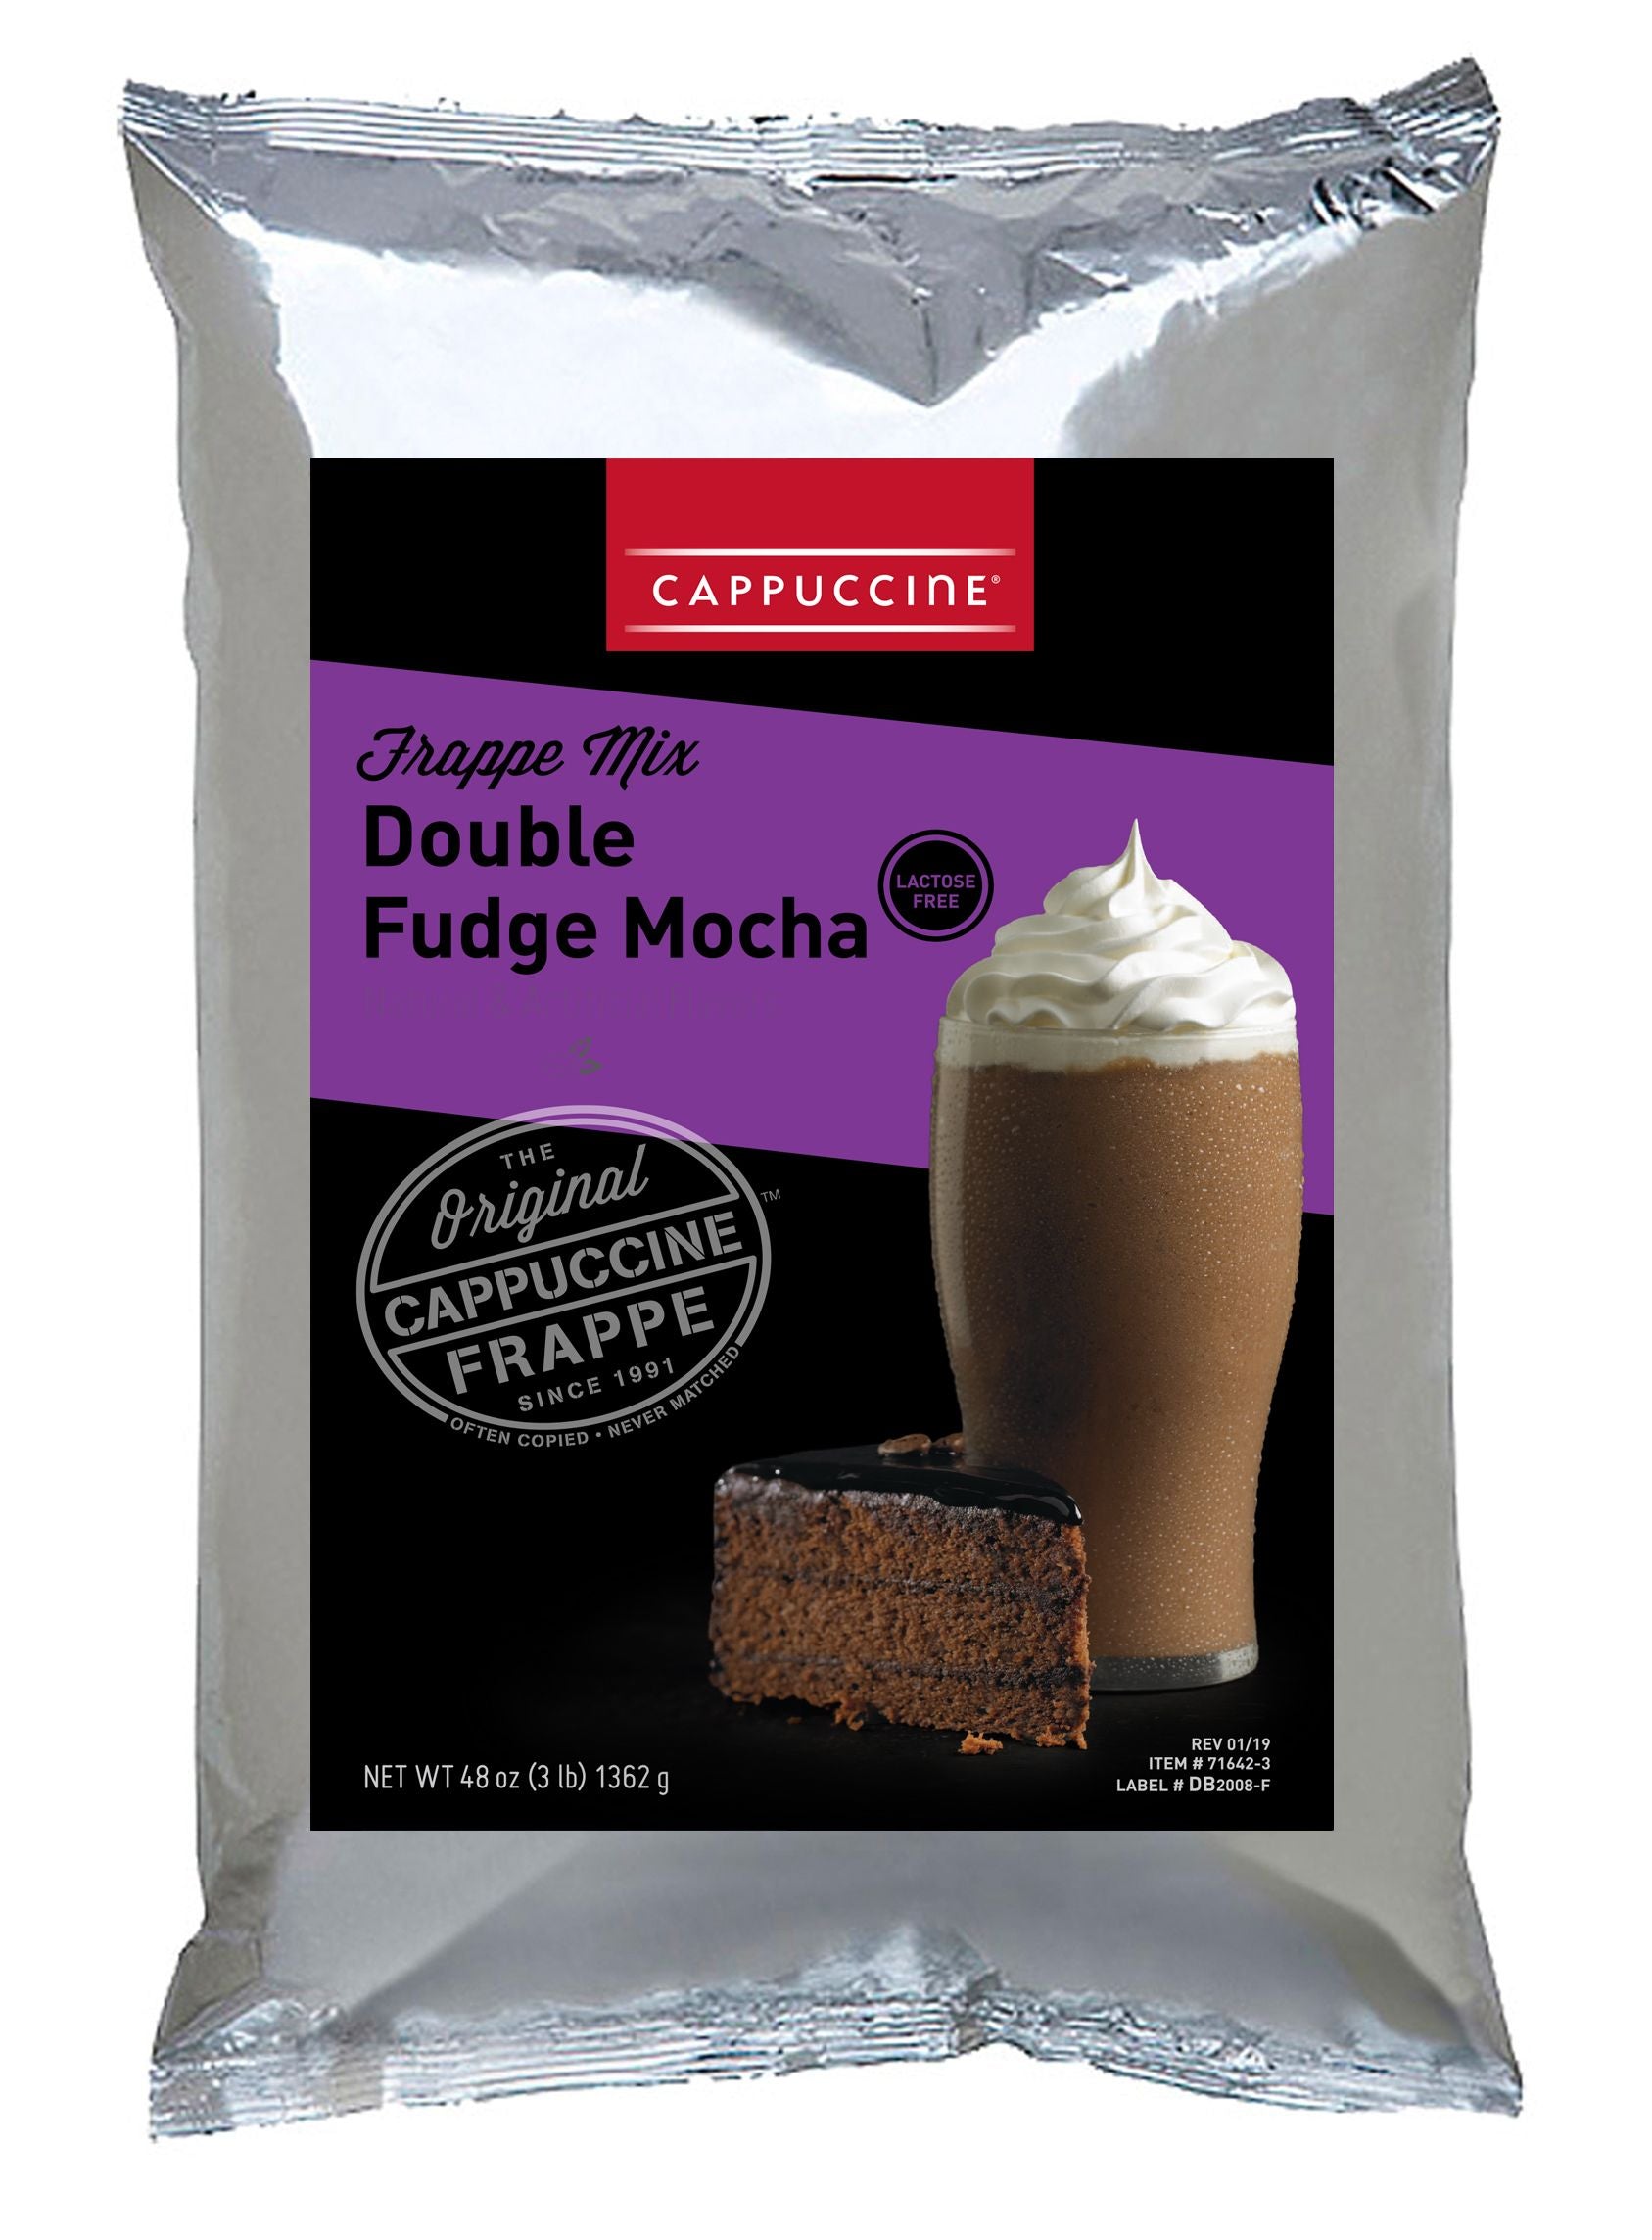 Cappuccine Coffee Frappe Mix - 3 lb. Bulk Bag: Double Fudge Mocha